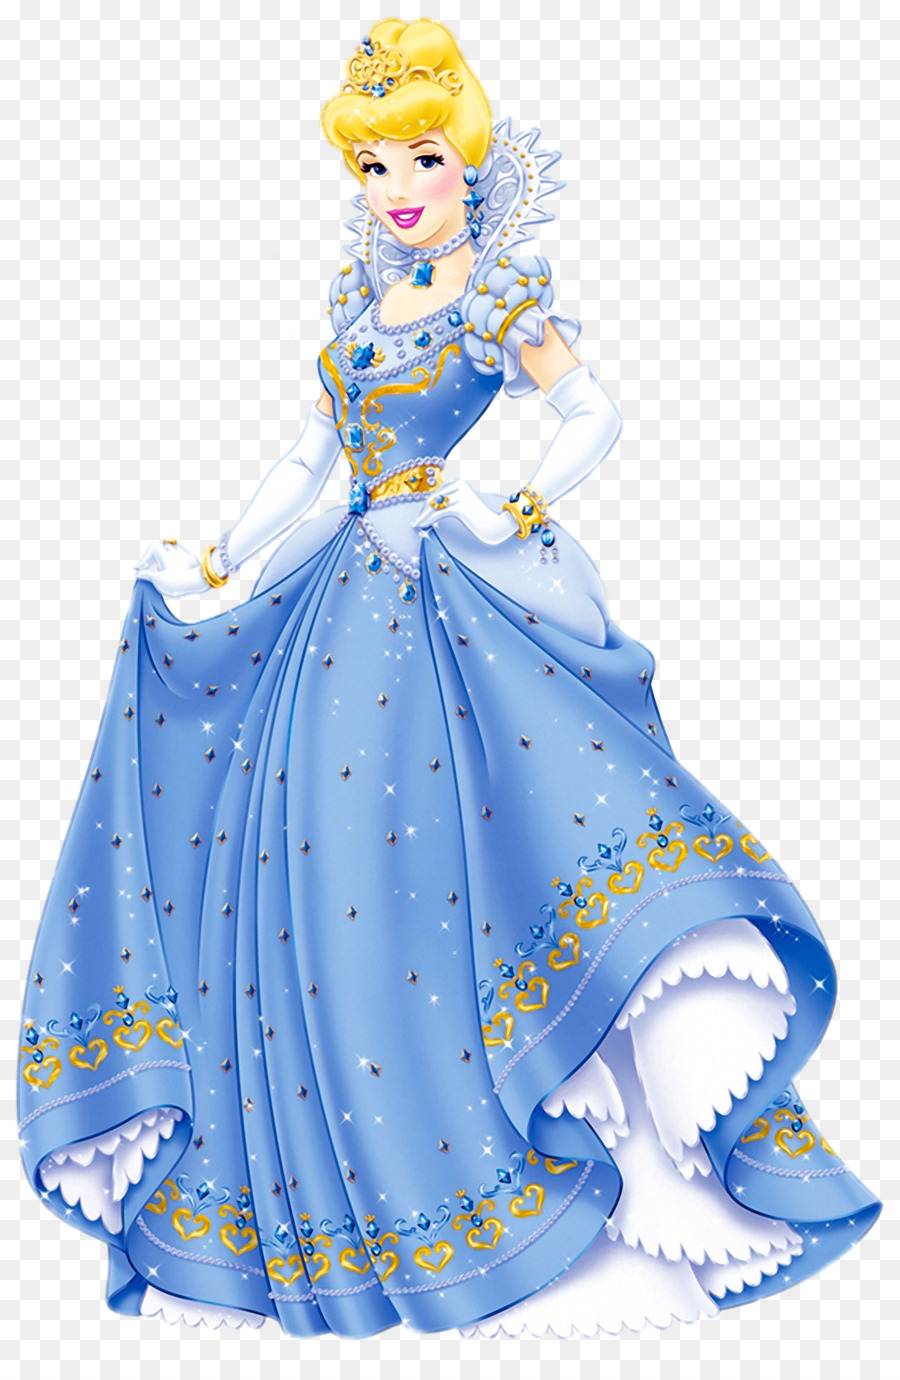 Disney Princess: My Fairytale Adventure Cinderella Princess Aurora Rapunzel Princess Jasmine - Transparent Princess Cliparts png download - 1135*1720 - Free Transparent Disney Princess My Fairytale Adventure png Download.